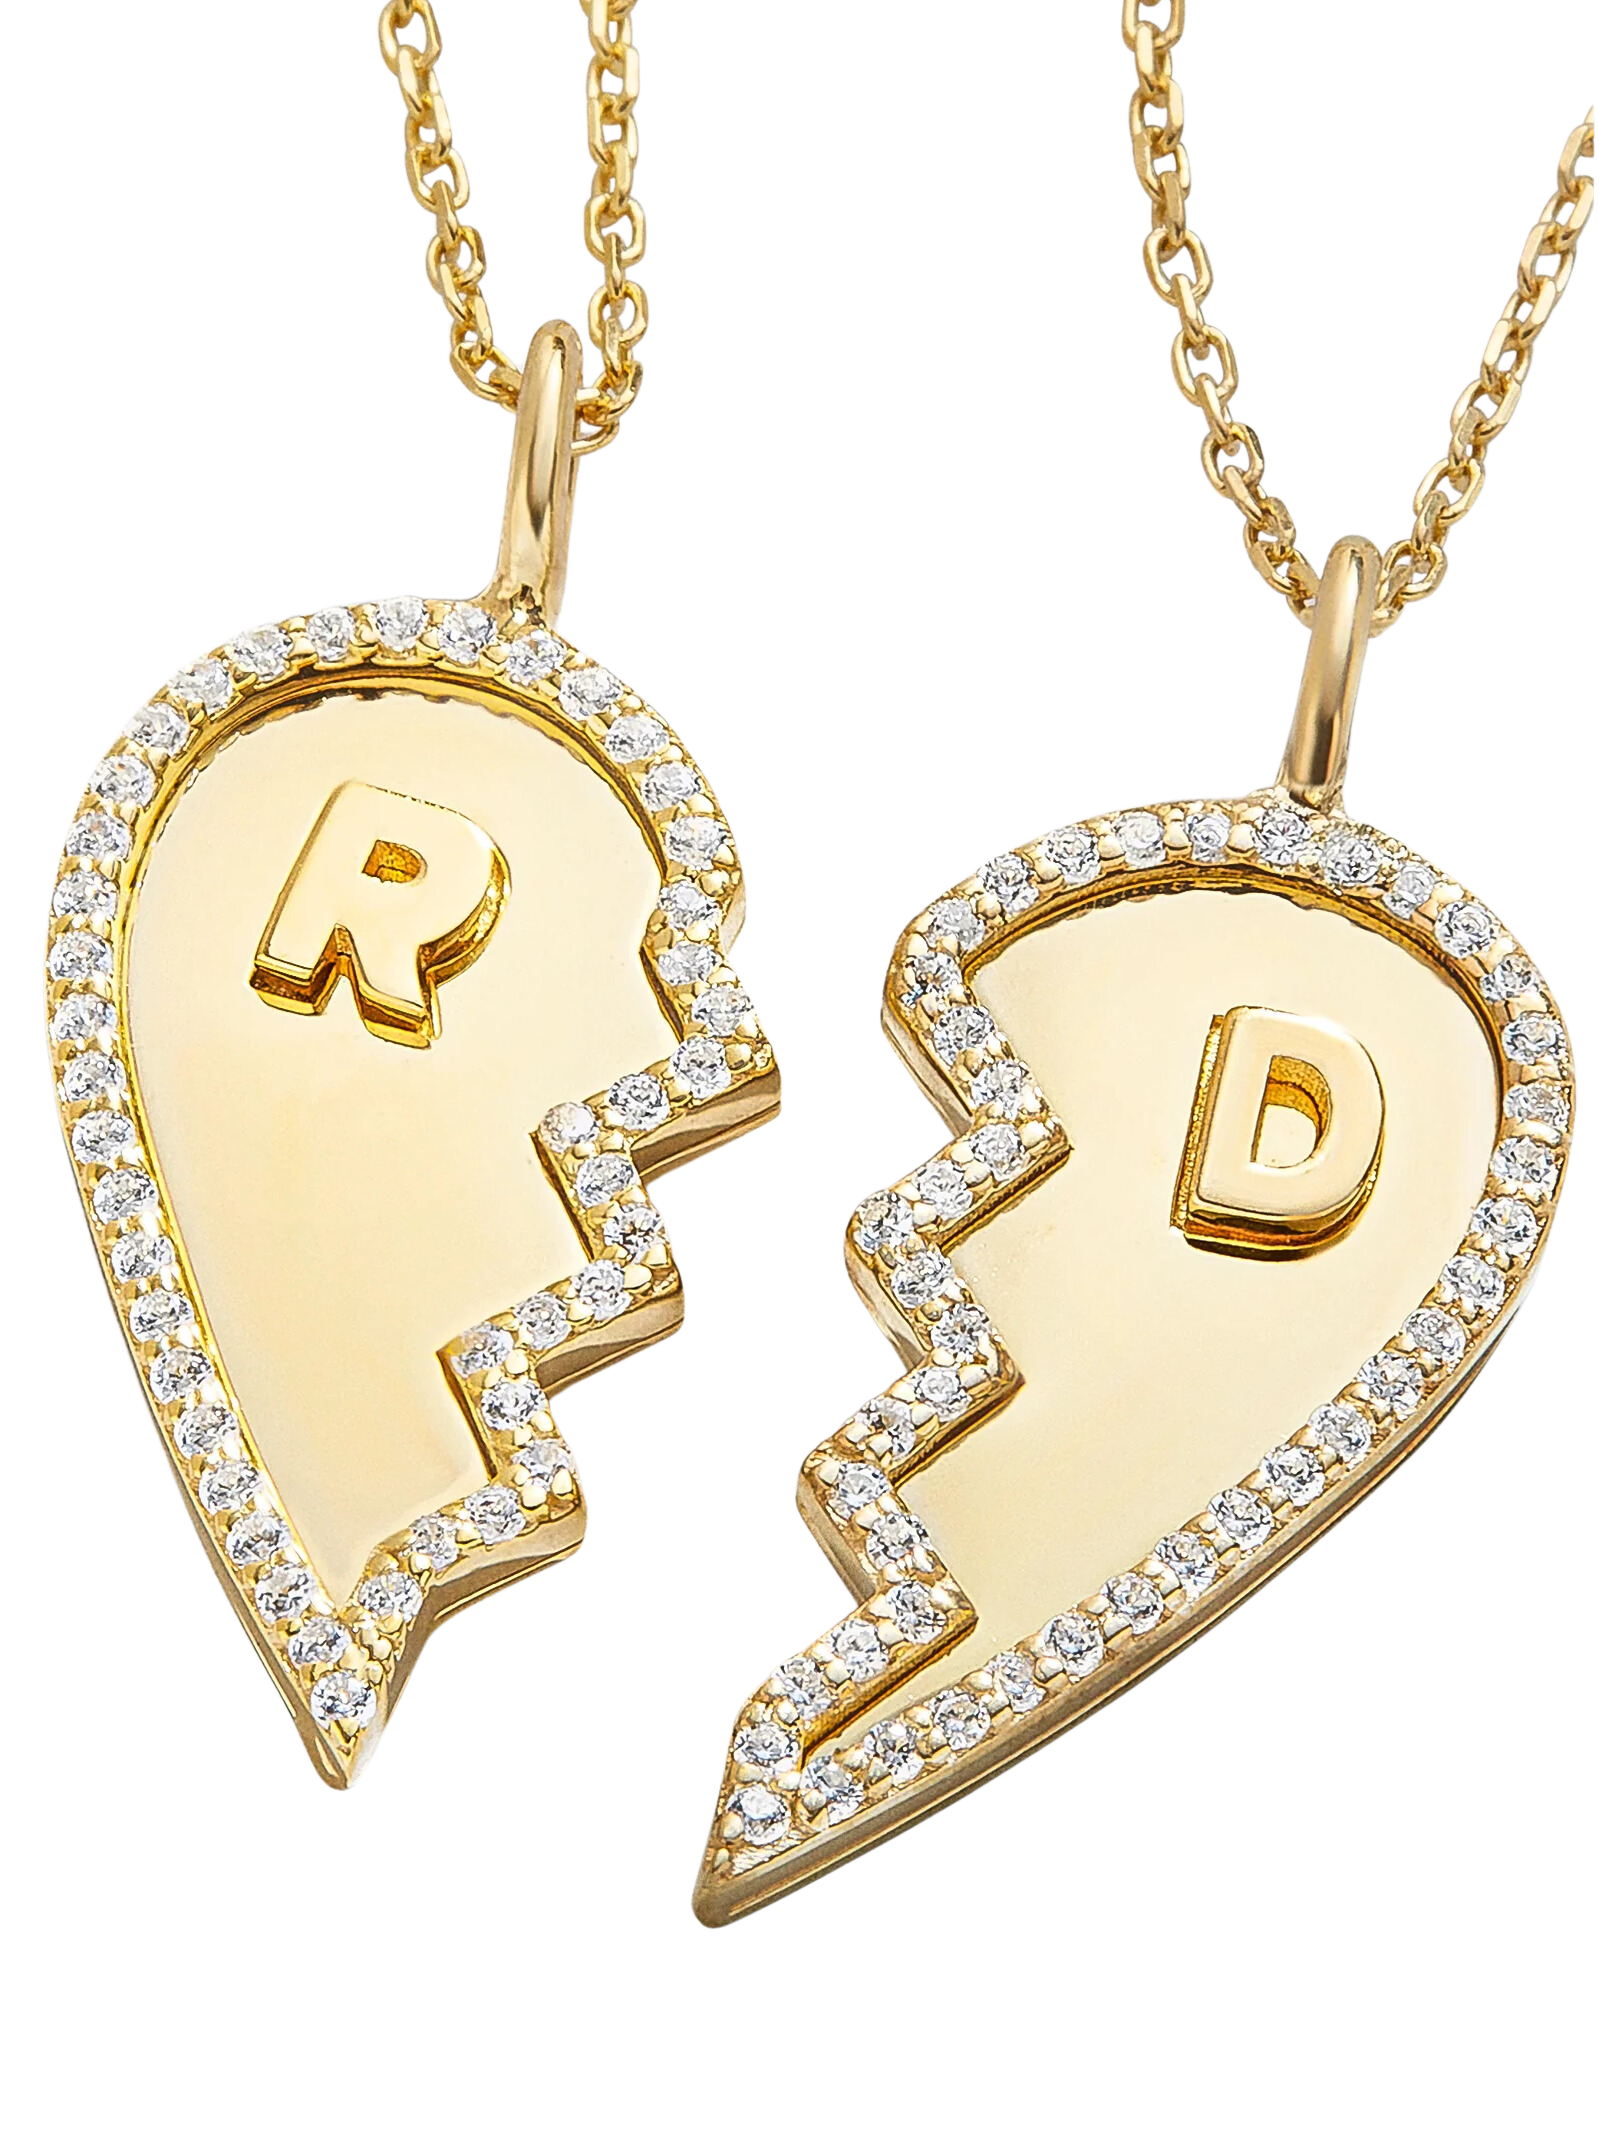 Custommade Couple Goal Heart Necklace